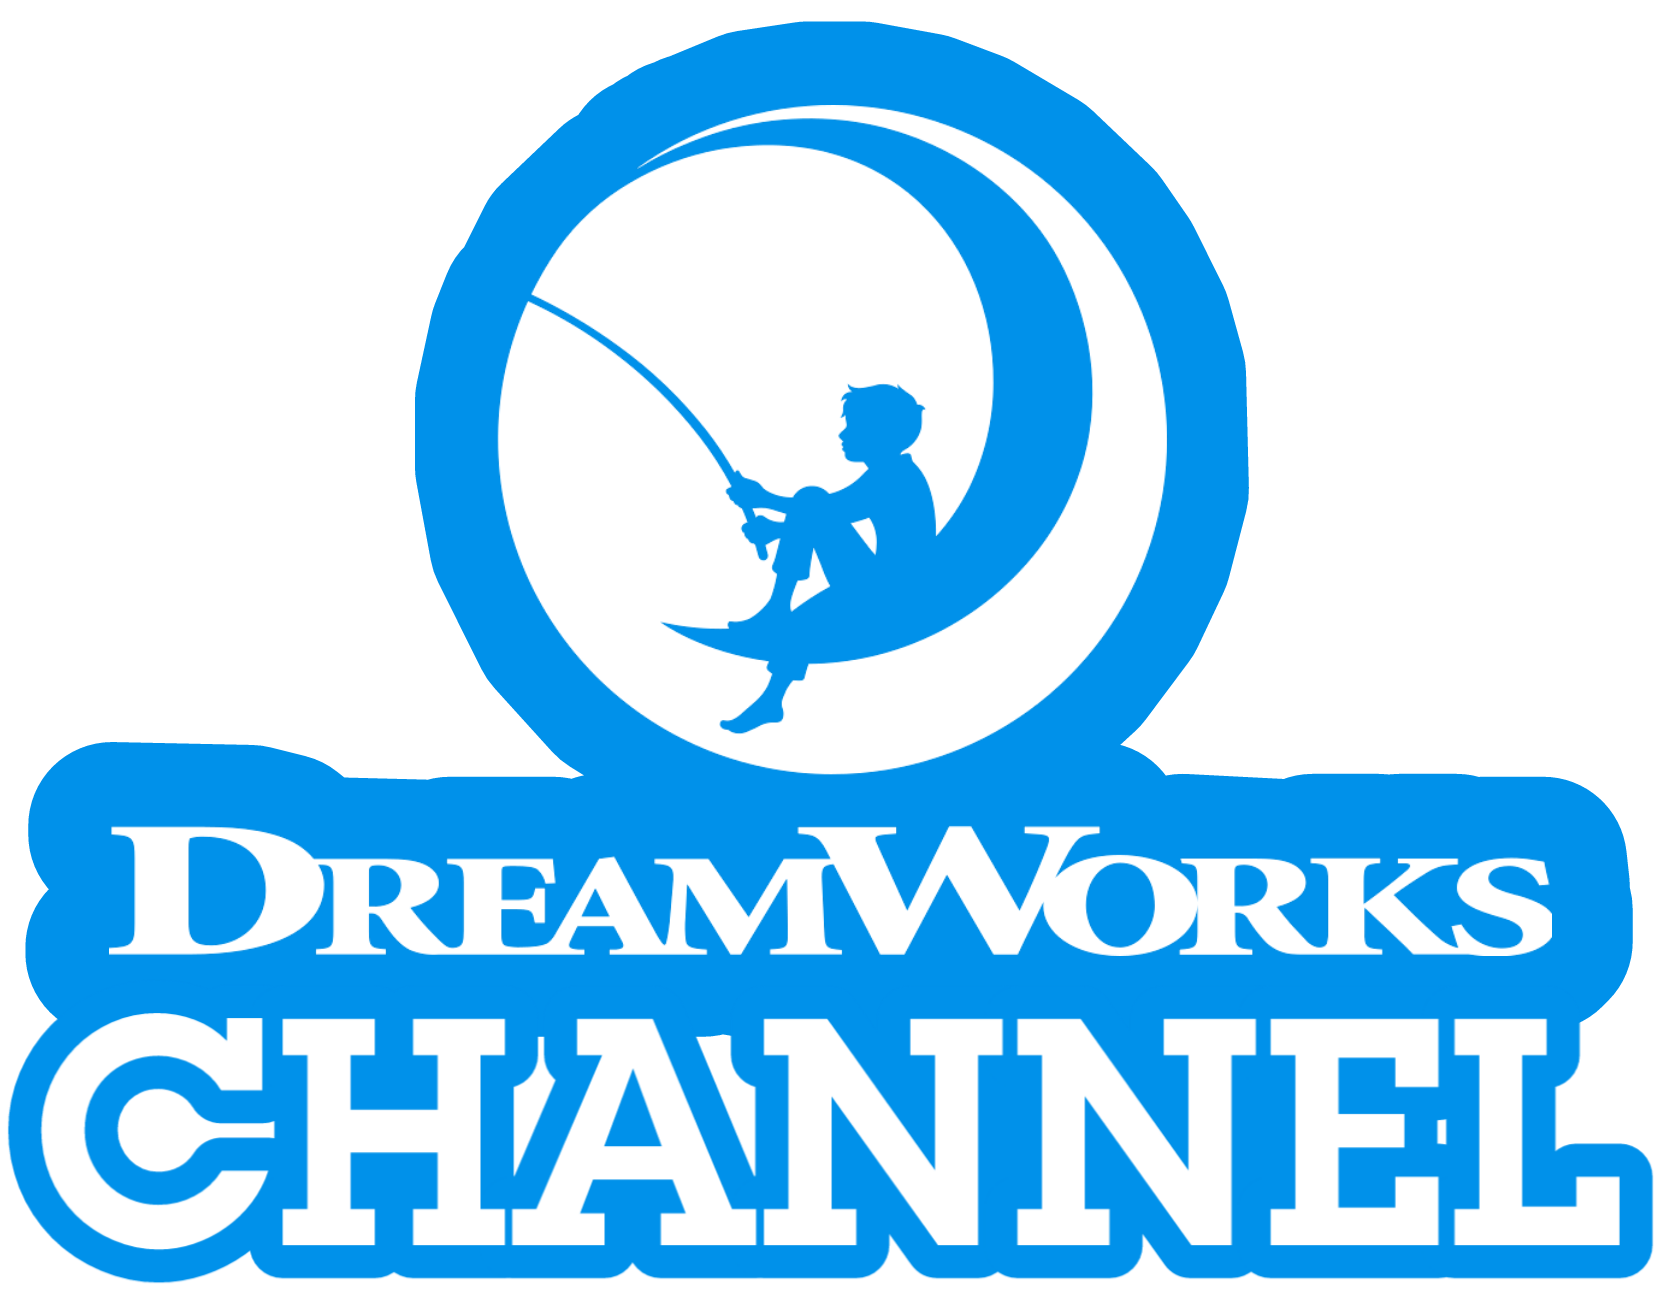 Dreamworks Channel 1.2788906009245